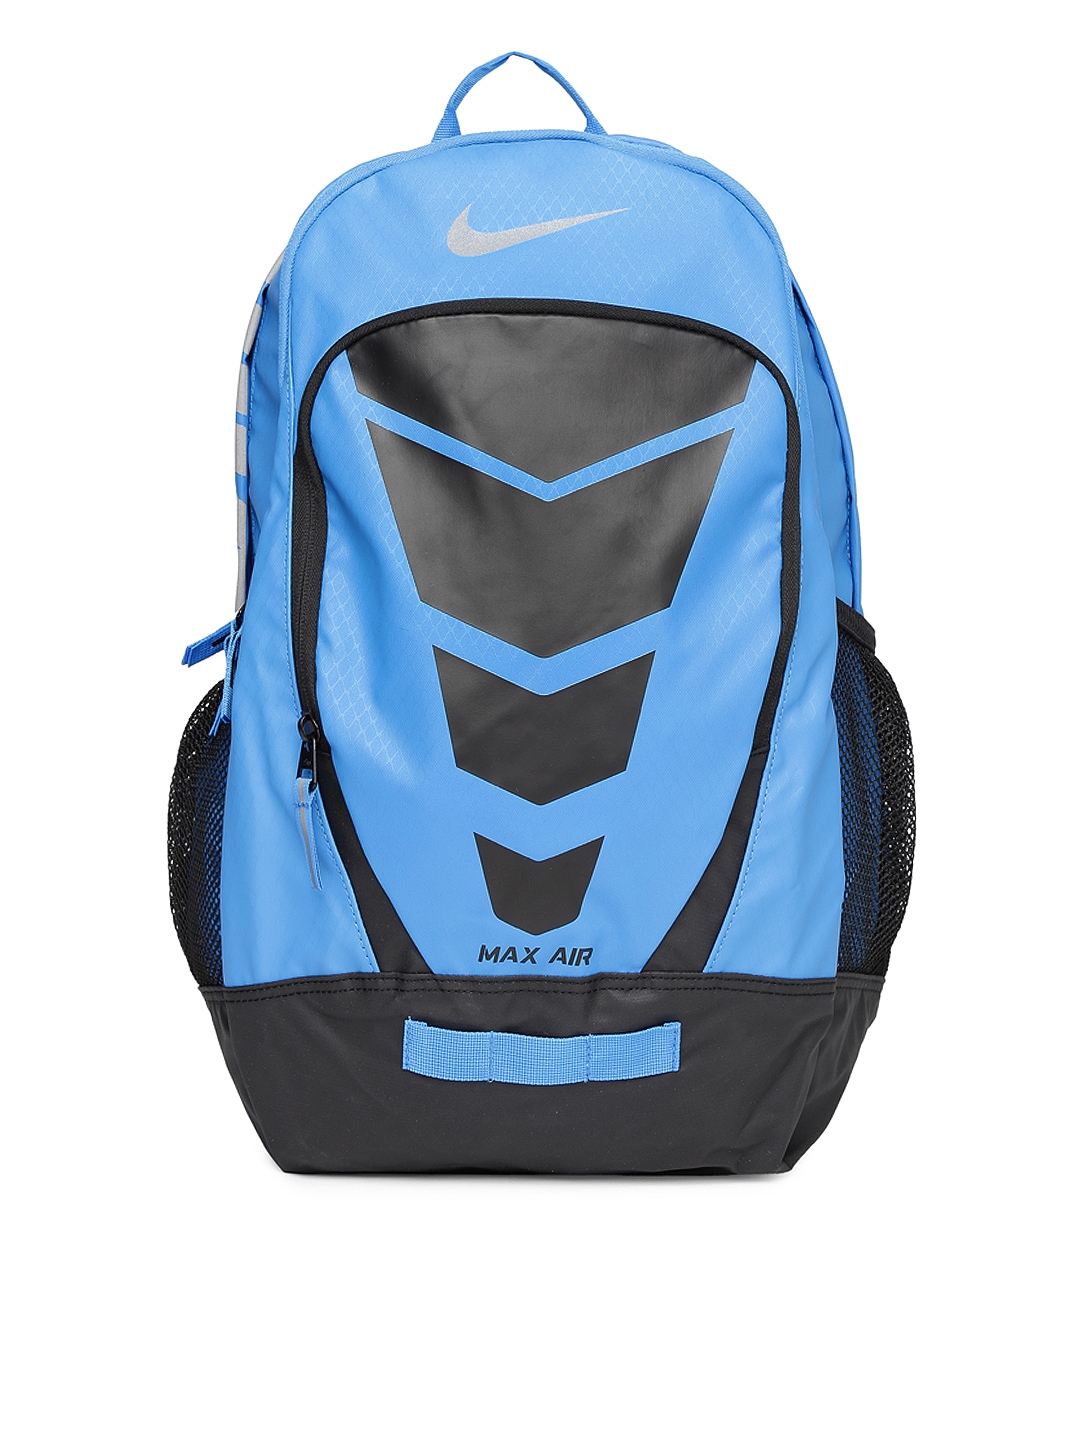 nike air max vapor backpack review